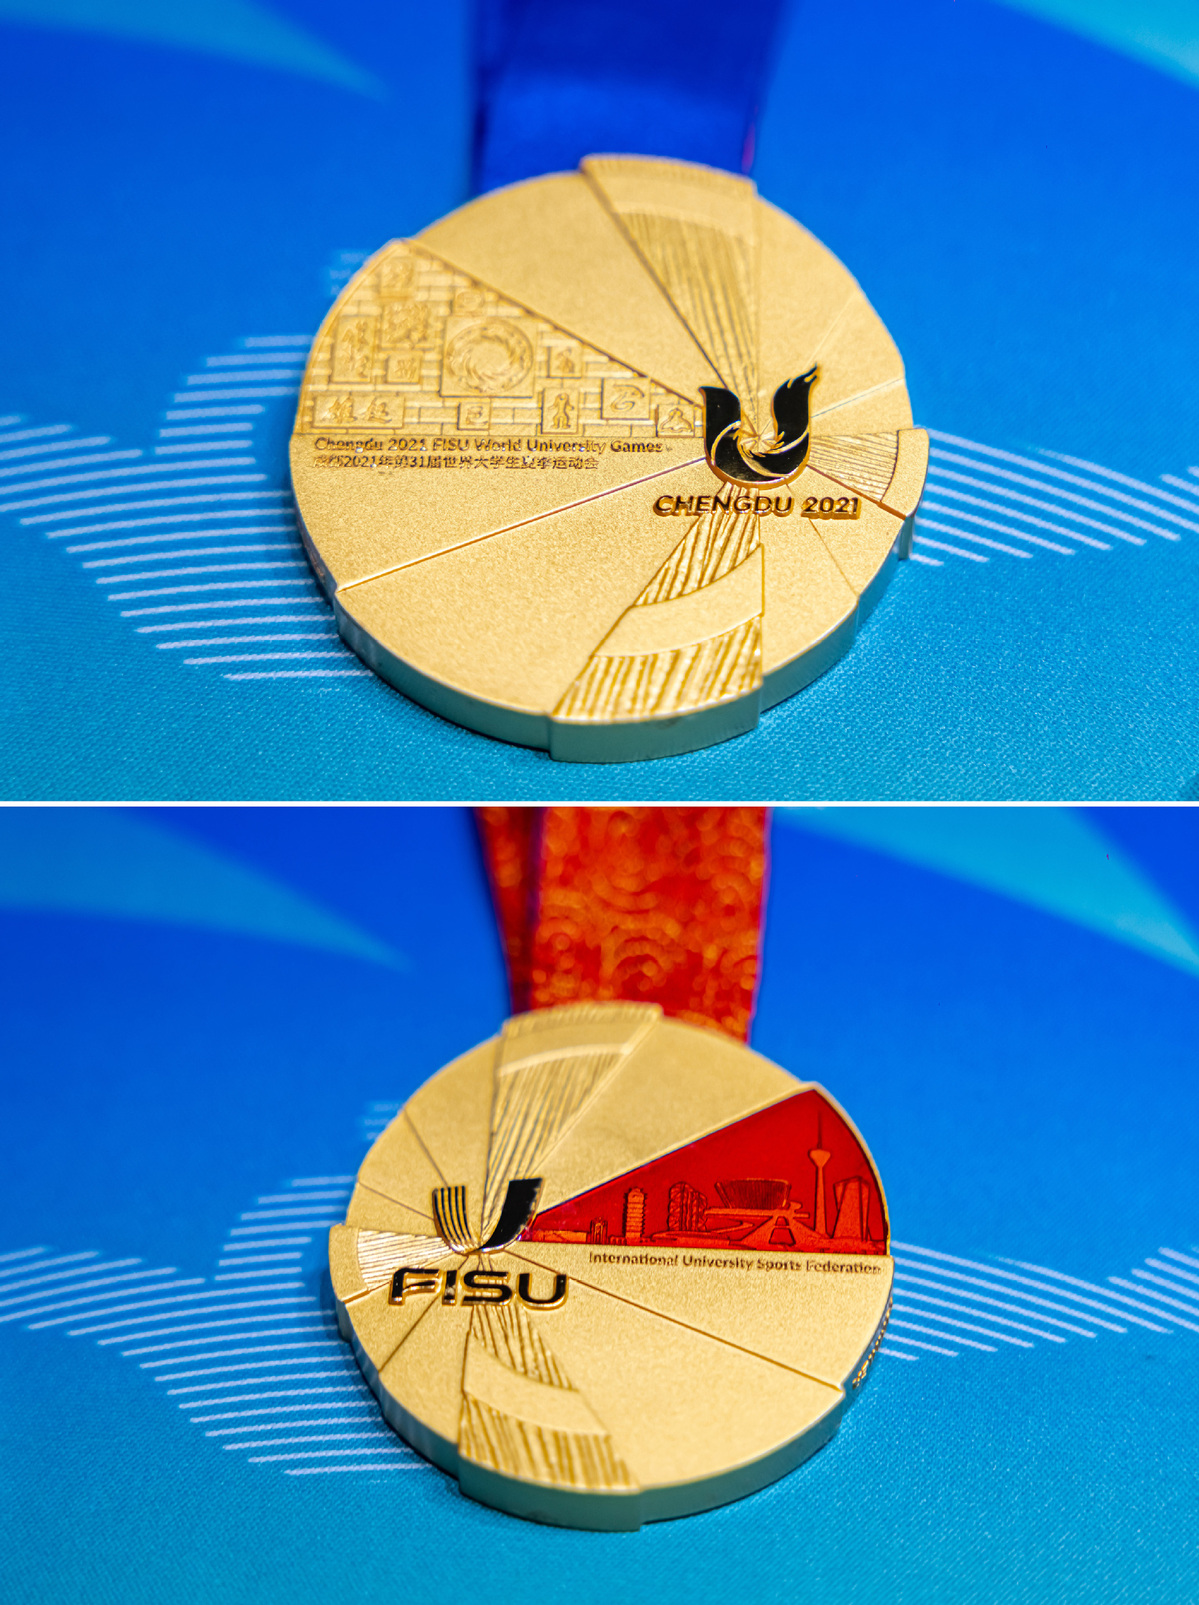 Chengdu Universiade medal design unveiled with 100 days to go